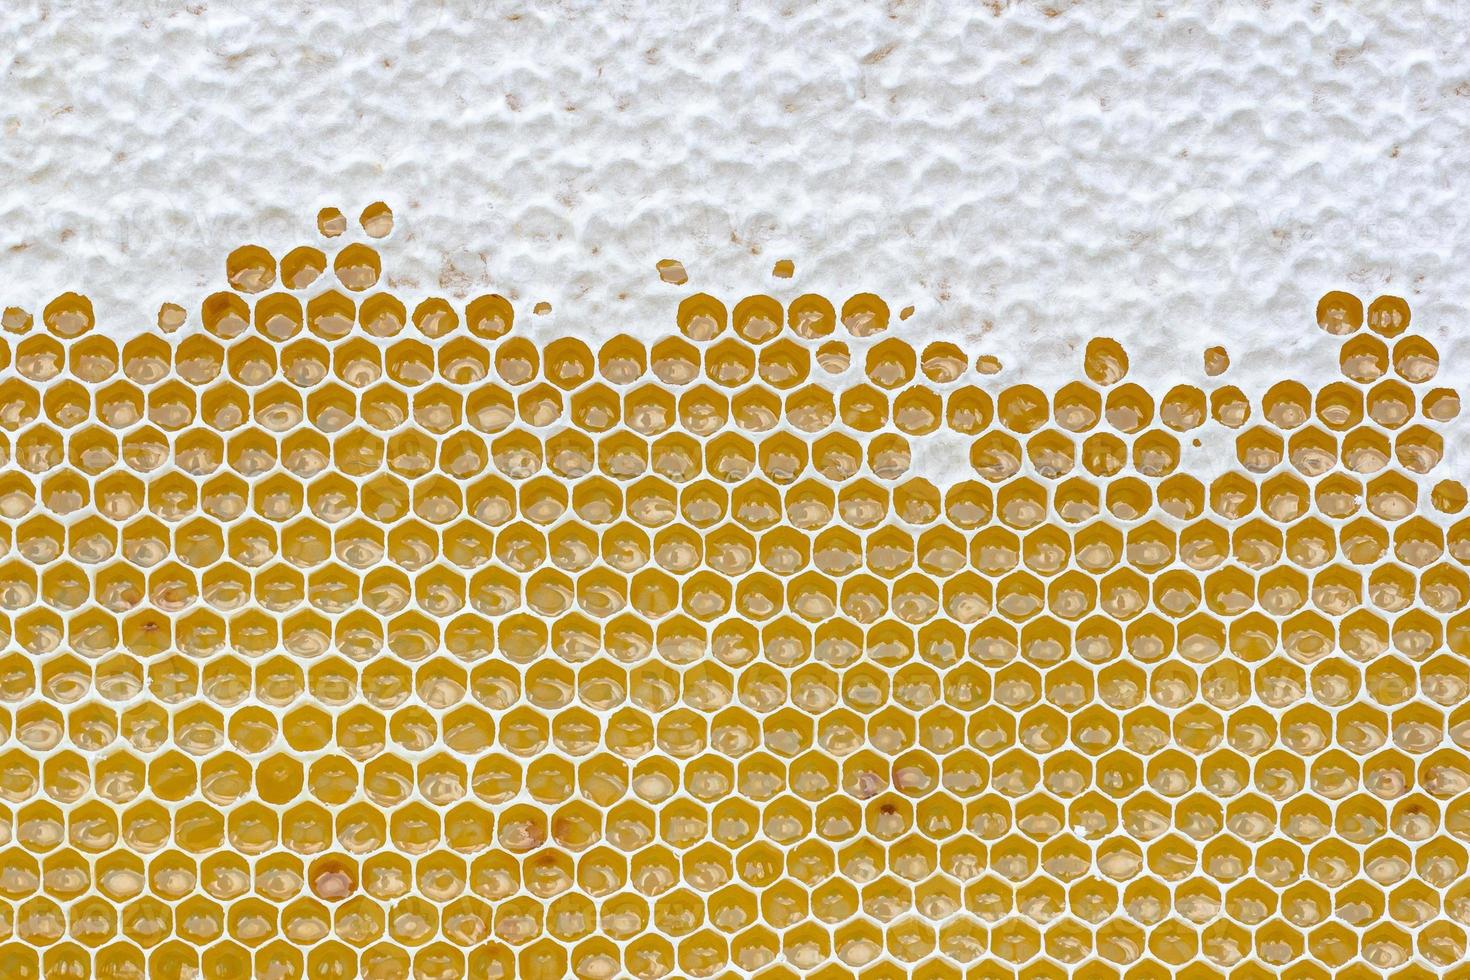 Honeycomb full of honey. Beekeeping concept photo